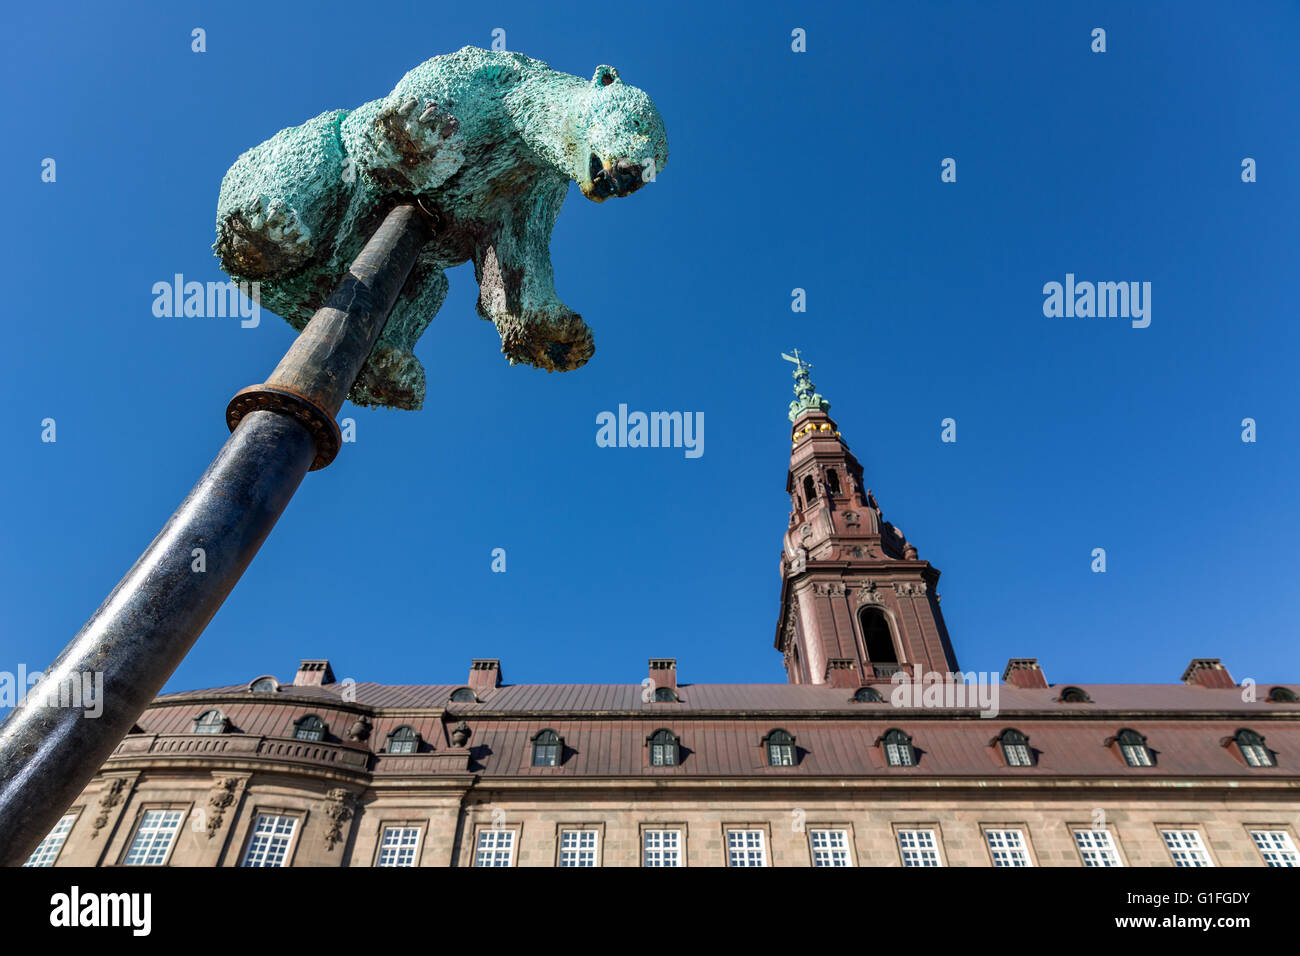 Die Skulptur "Unerträglich" vor dem dänischen Parlament, Slotsholmen, Kopenhagen, Dänemark Stockfoto